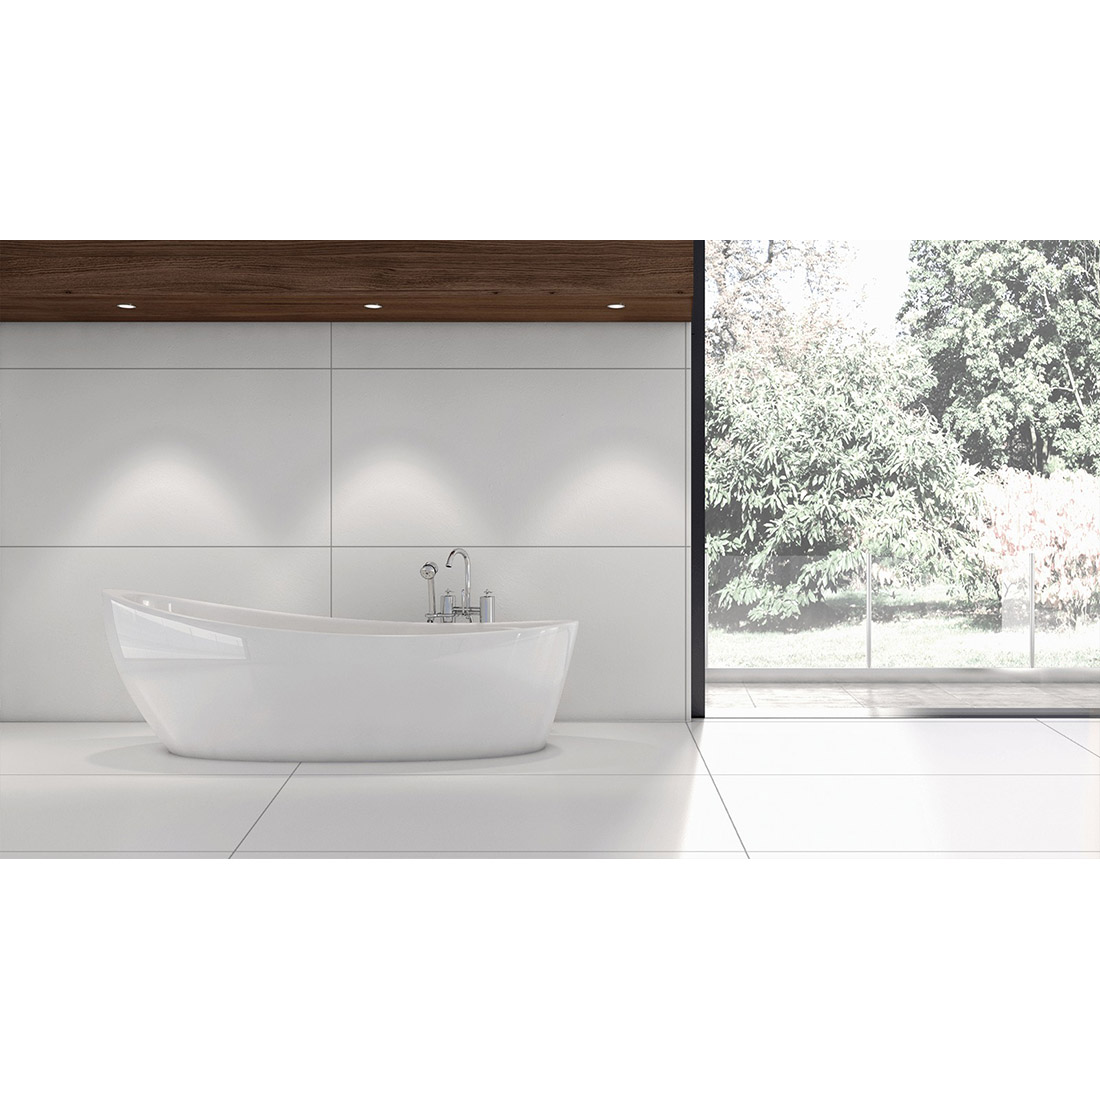 Shop Cemento Bianco Polished Stone tile 60x120 online at Euro bath